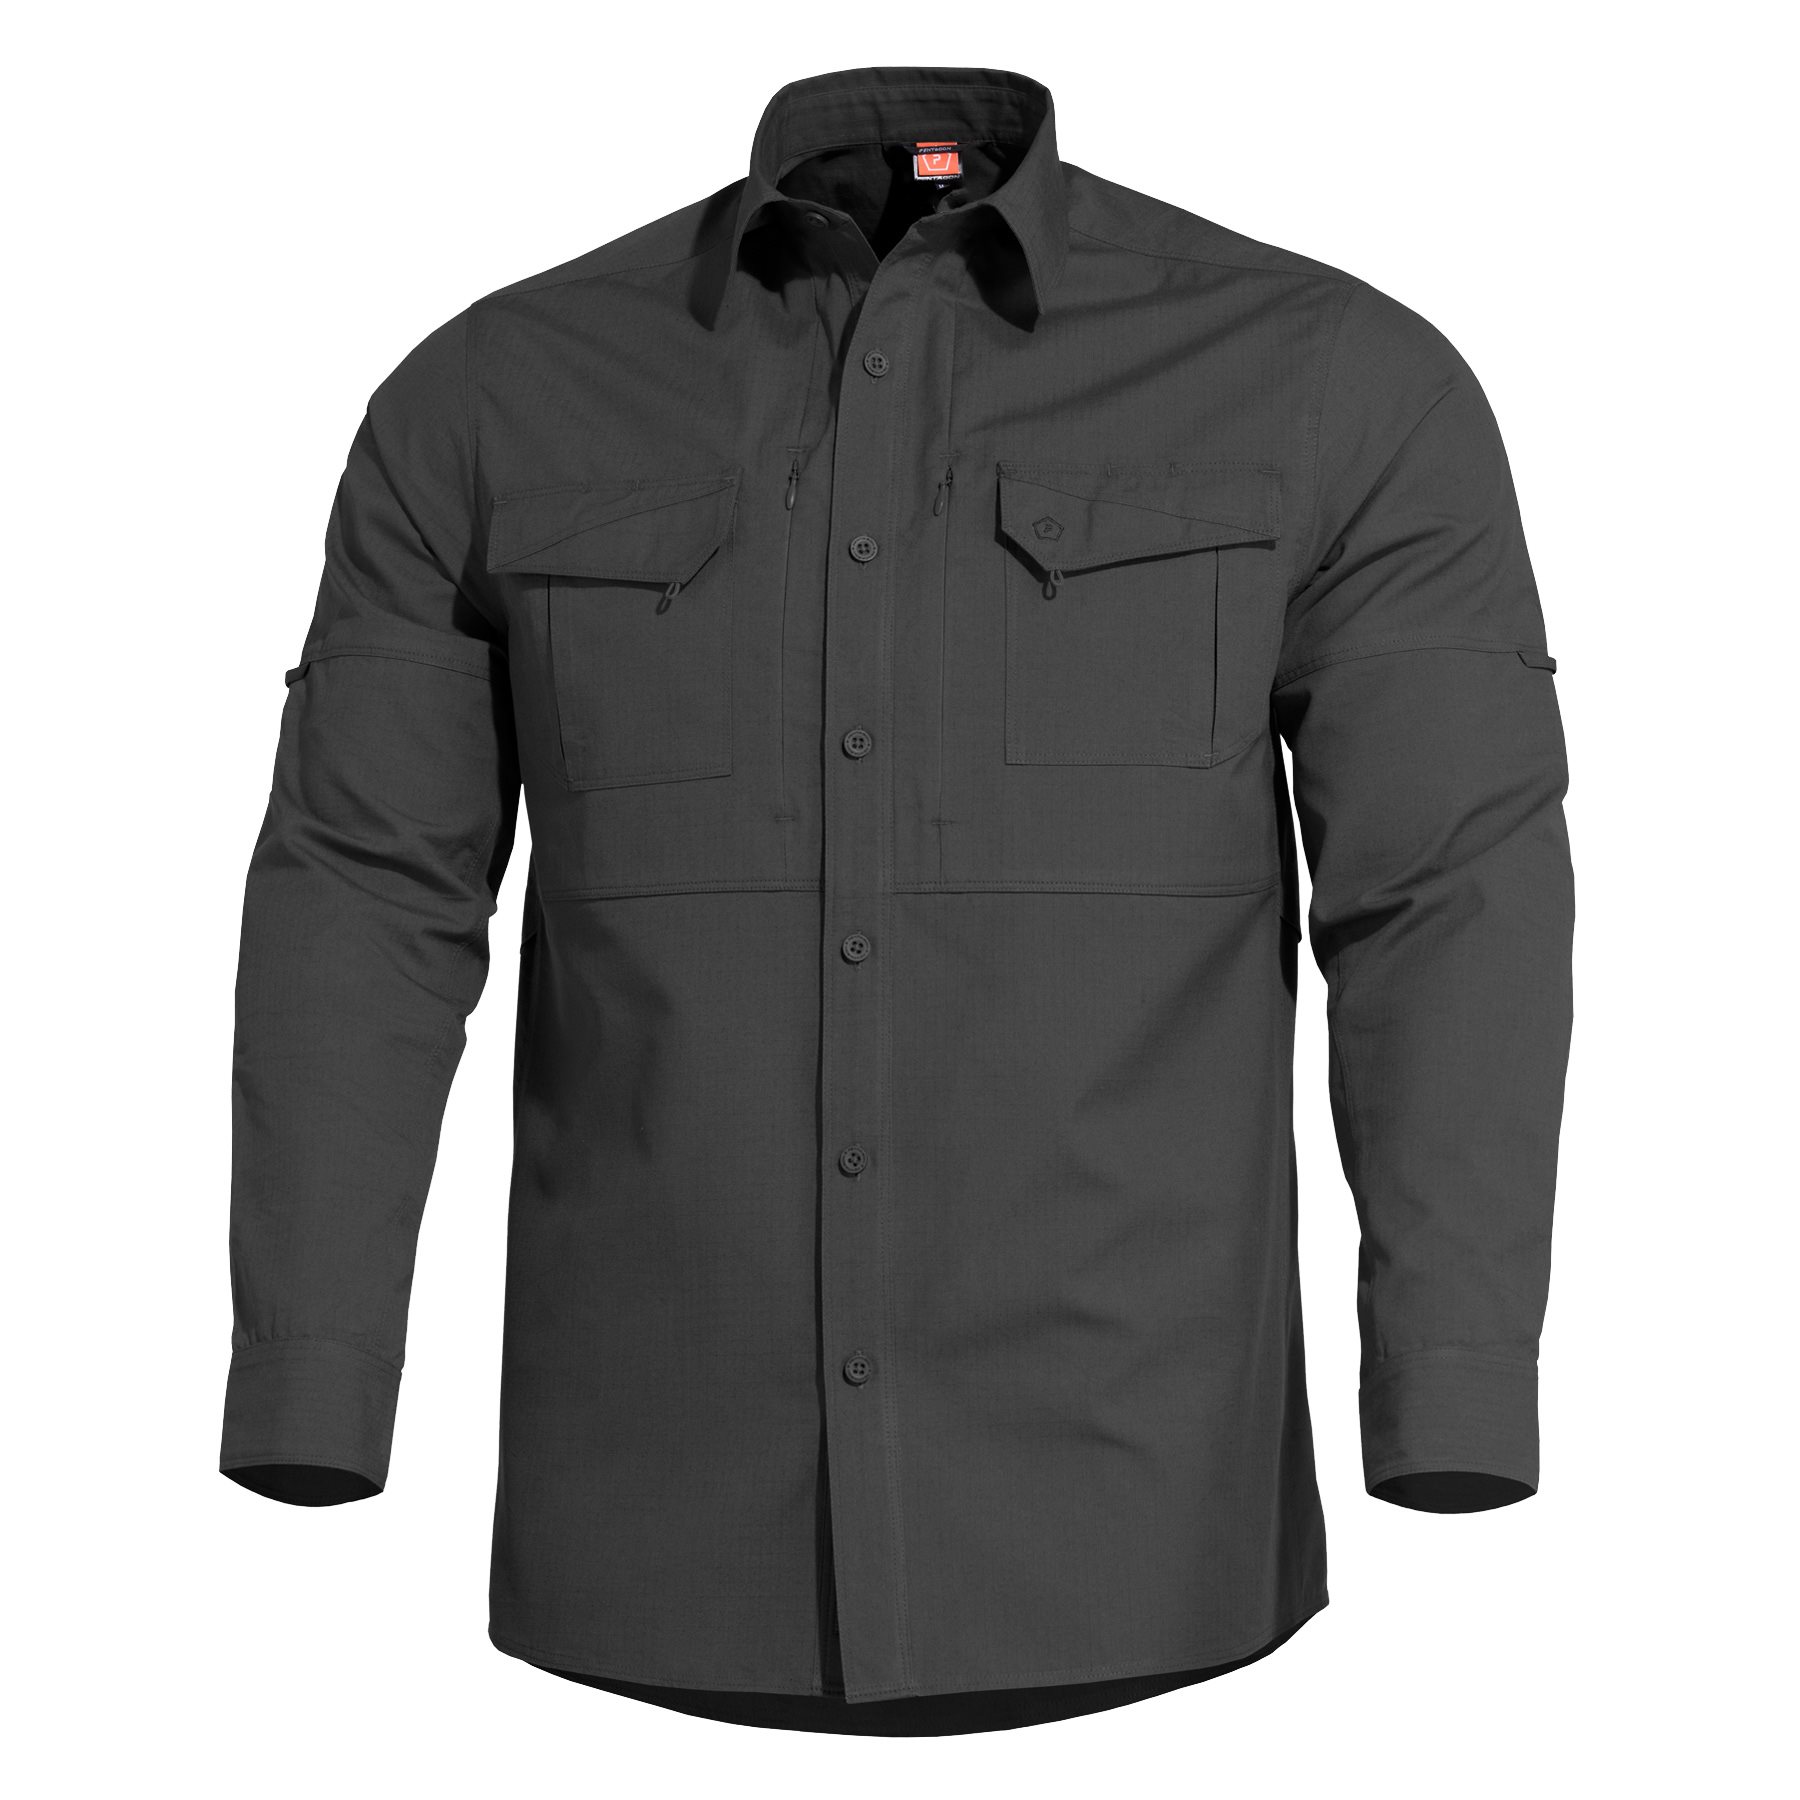 PLATO shirt BLACK PENTAGON K02019-01 L-11